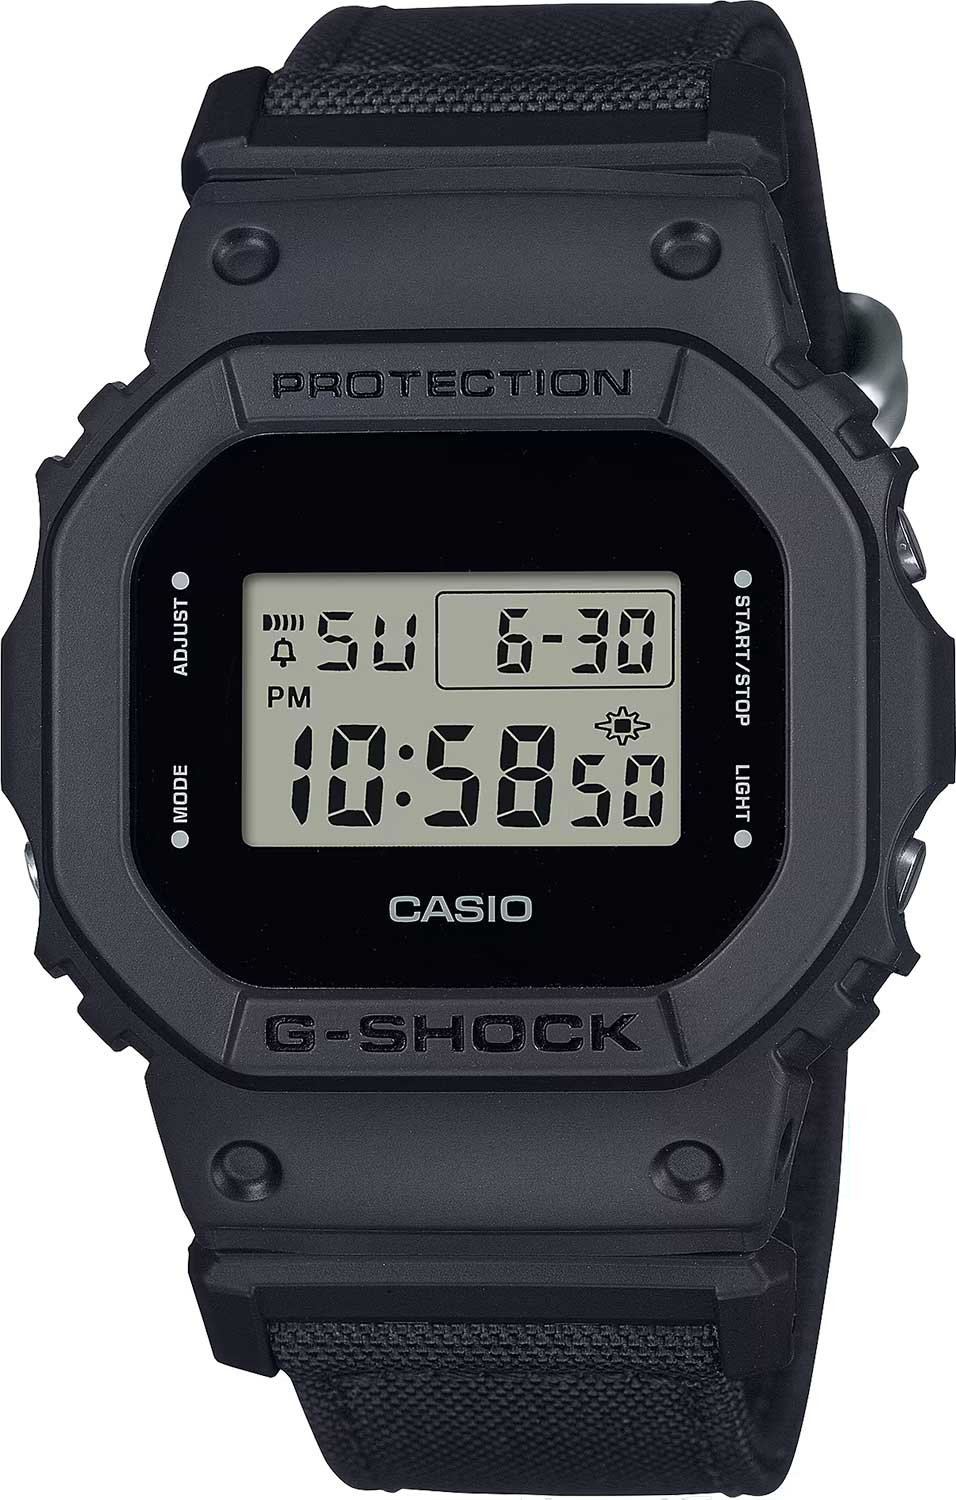    Casio G-SHOCK DW-5600BCE-1  